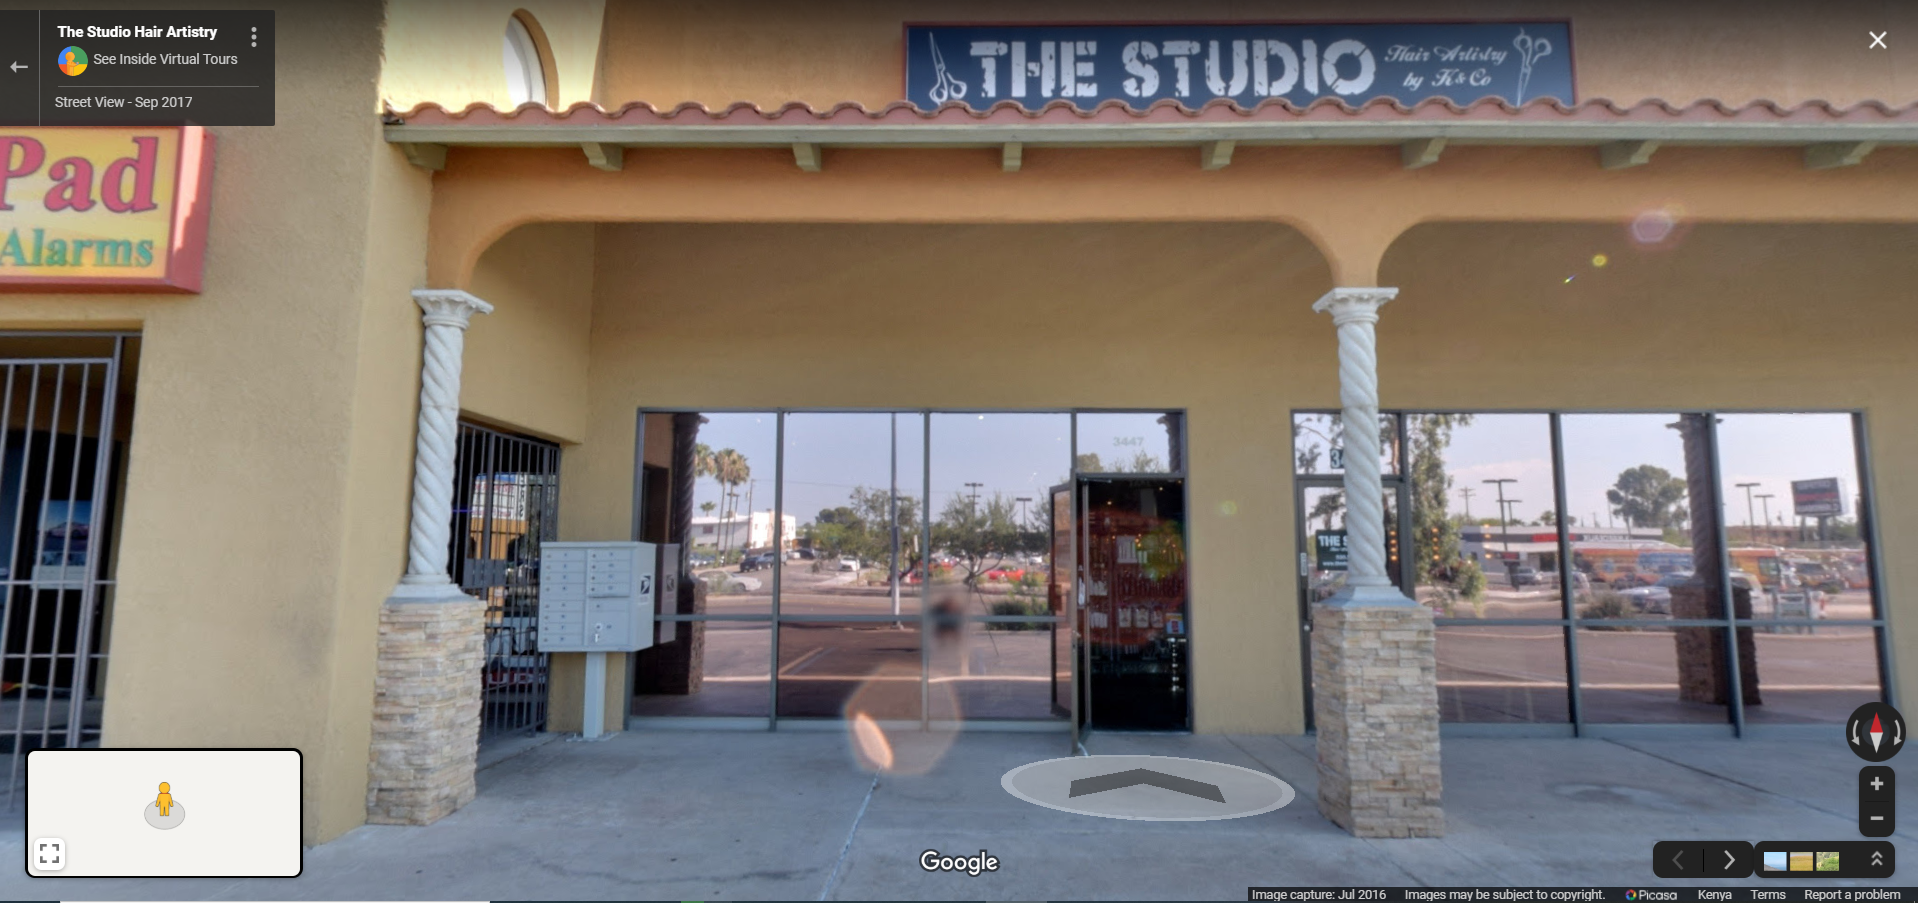 The Studio Hair Artistry - Tucson